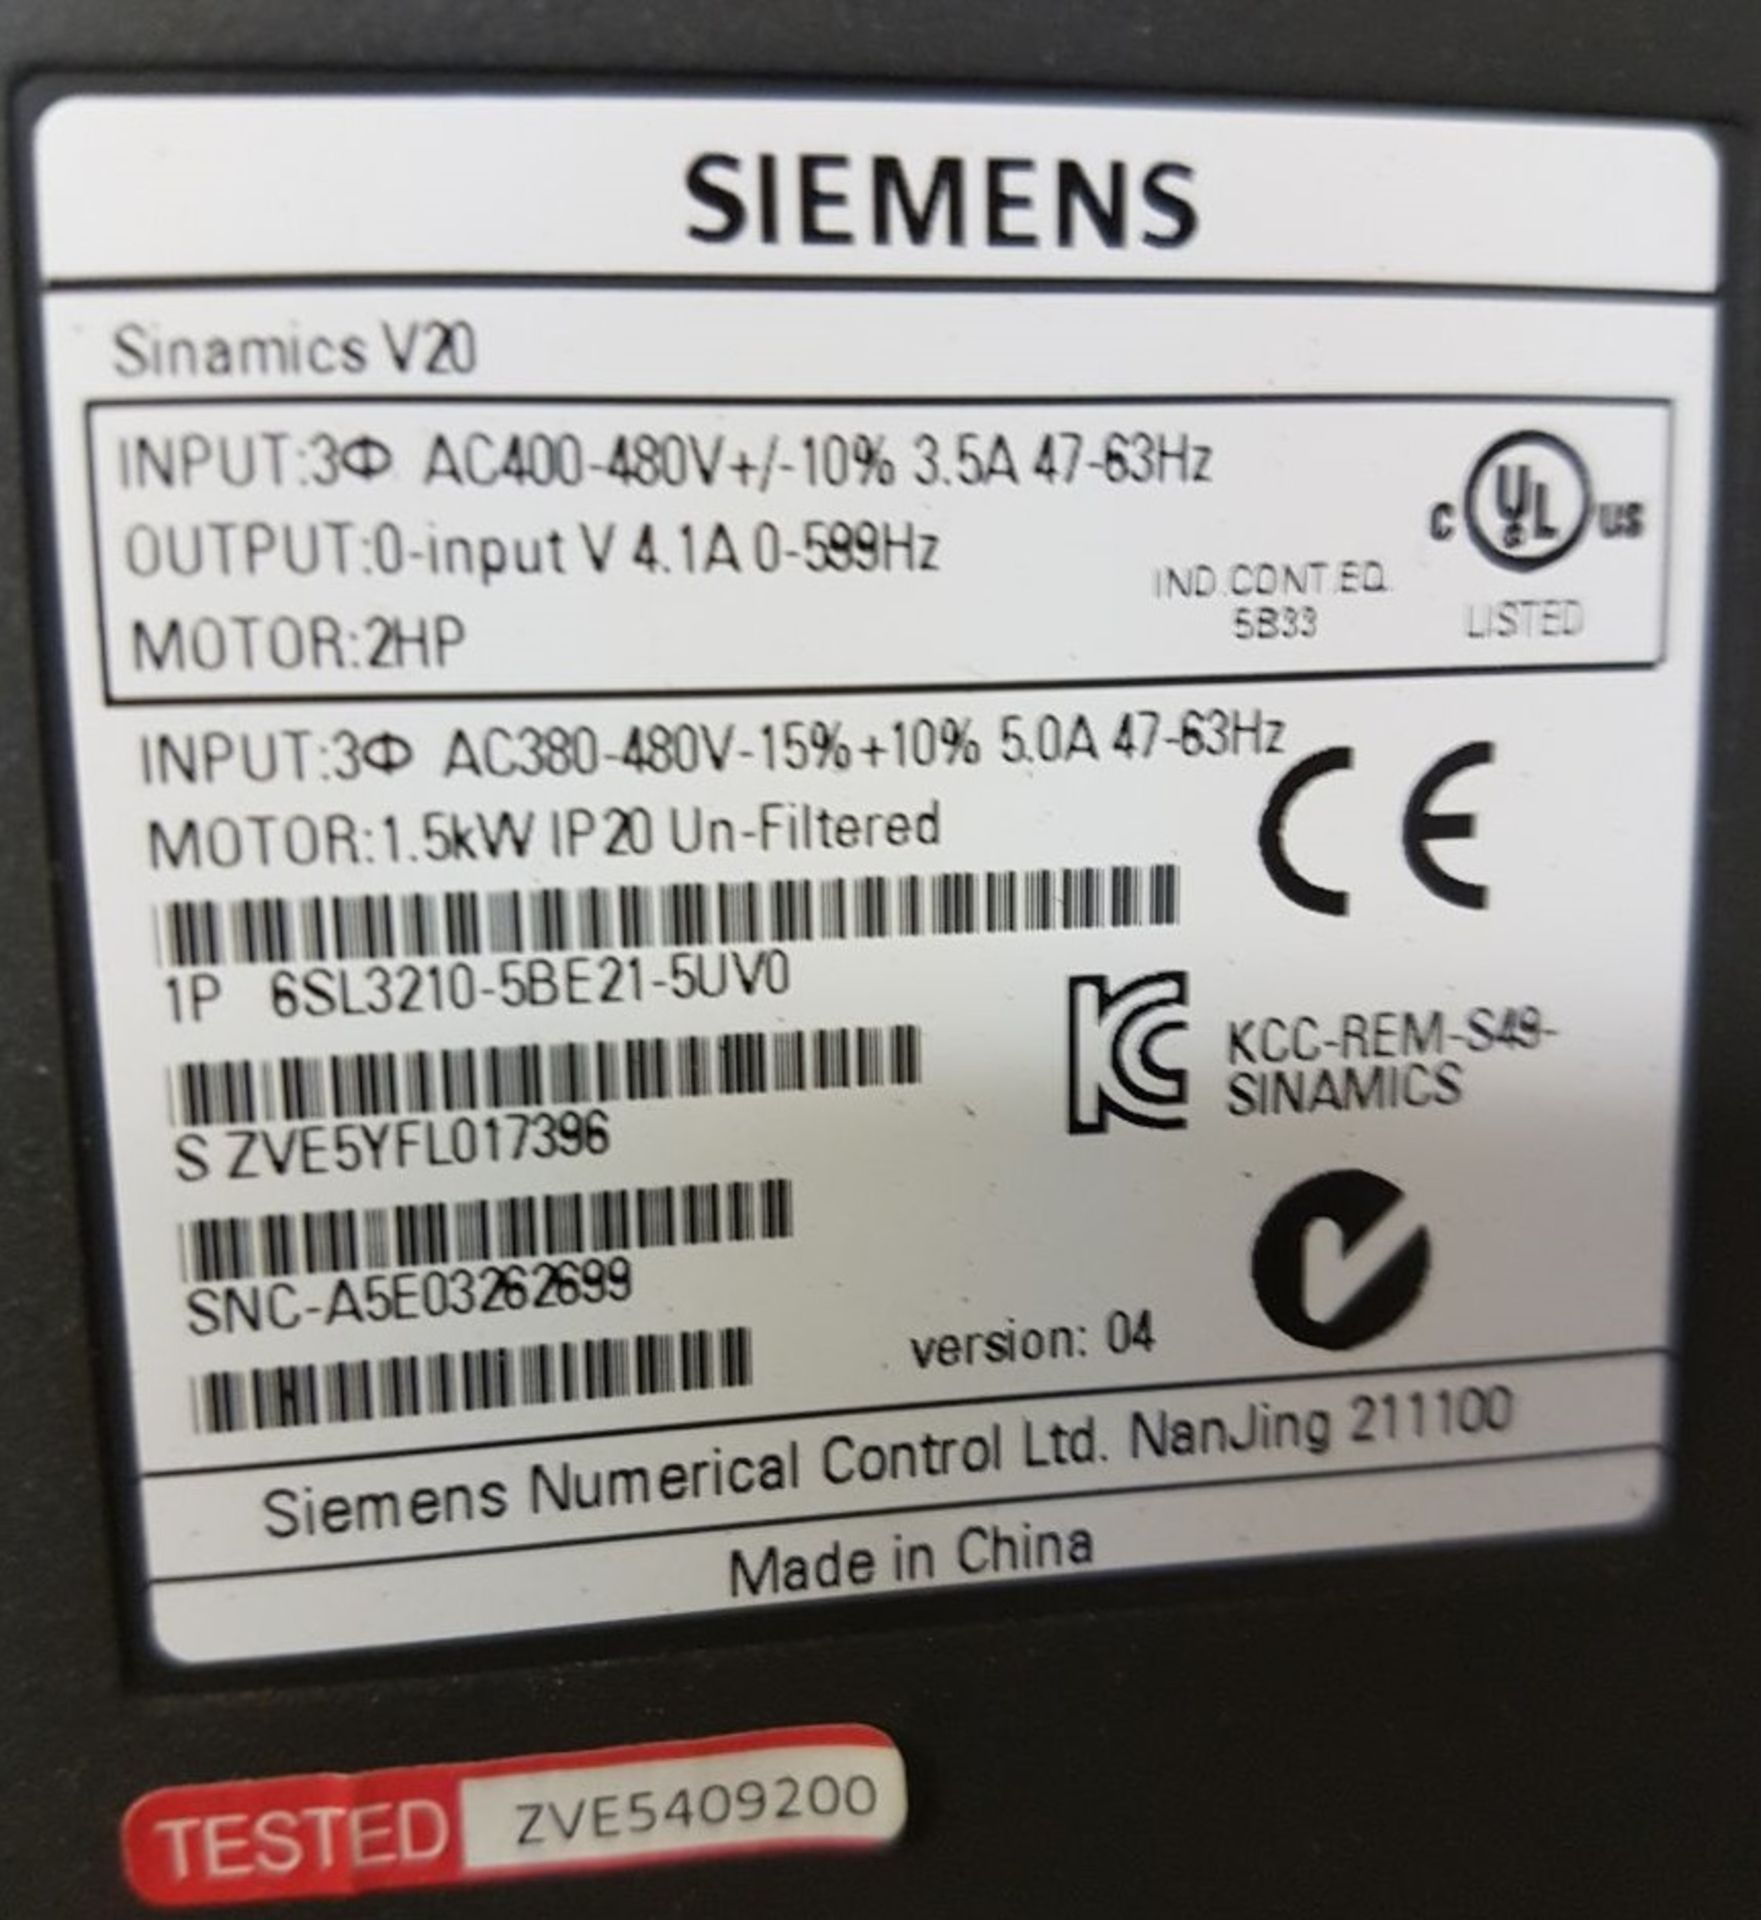 1 x 1.5kW Siemens Sinamics V20 inverter - Image 2 of 2